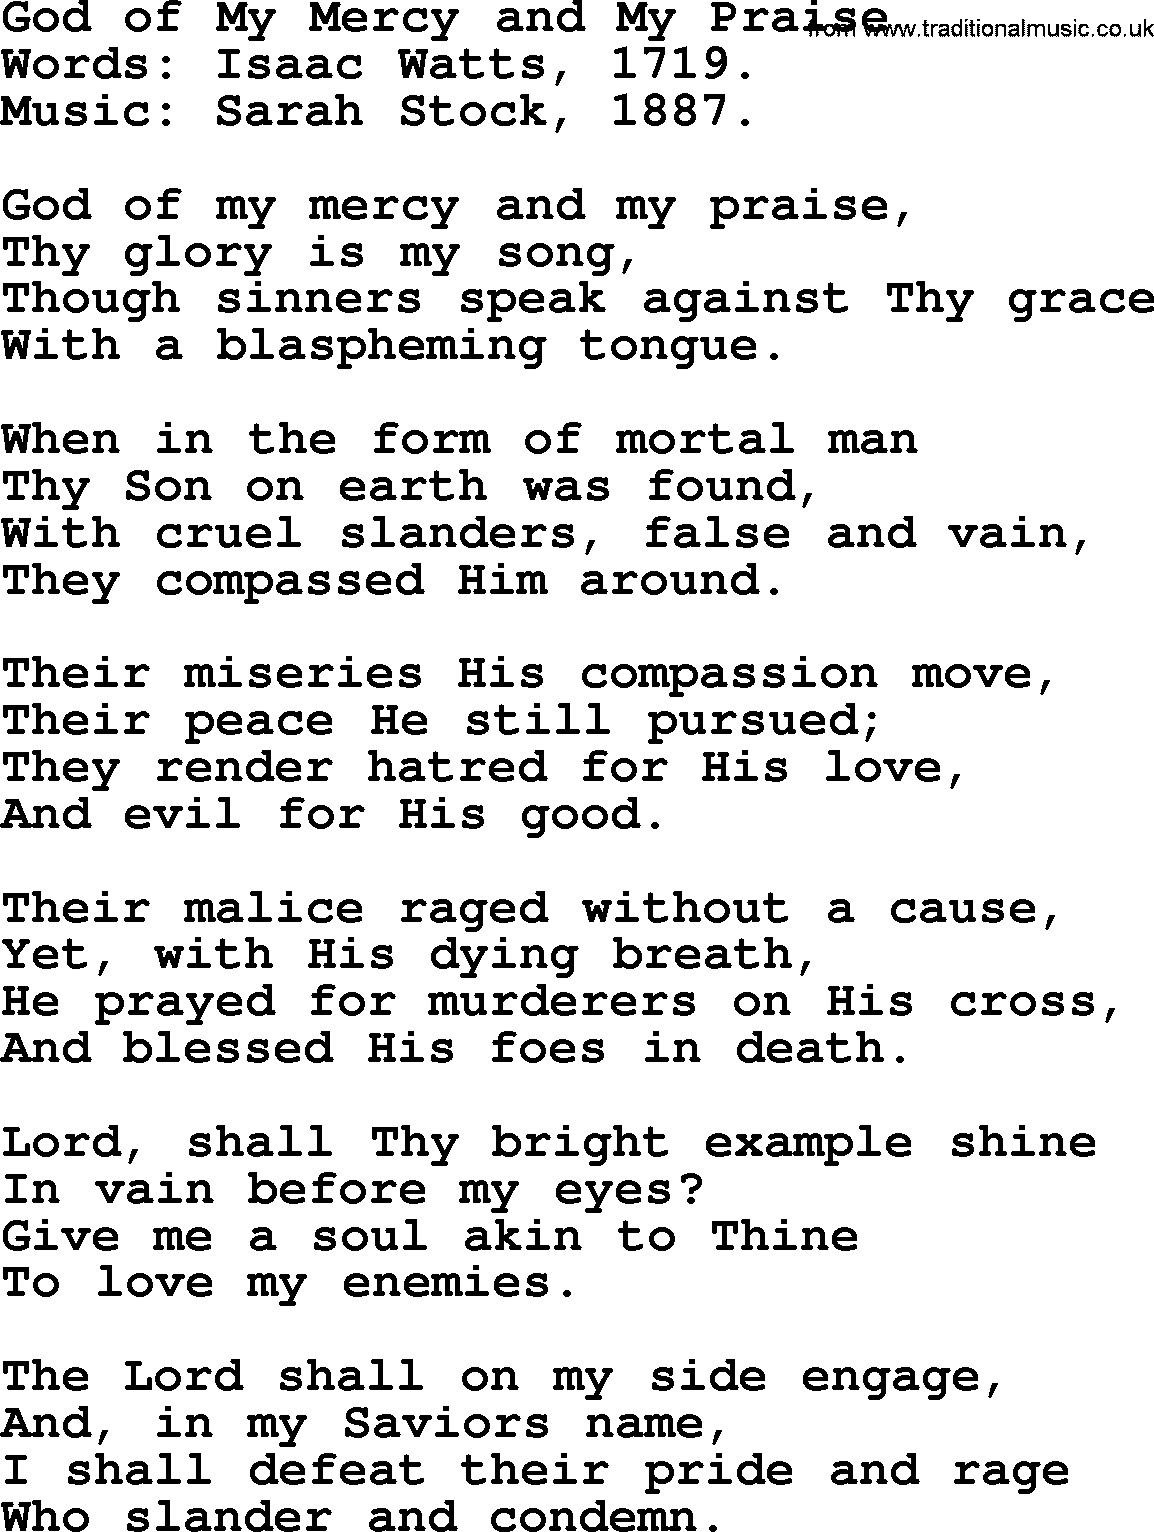 Isaac Watts Christian hymn: God of My Mercy and My Praise- lyricss